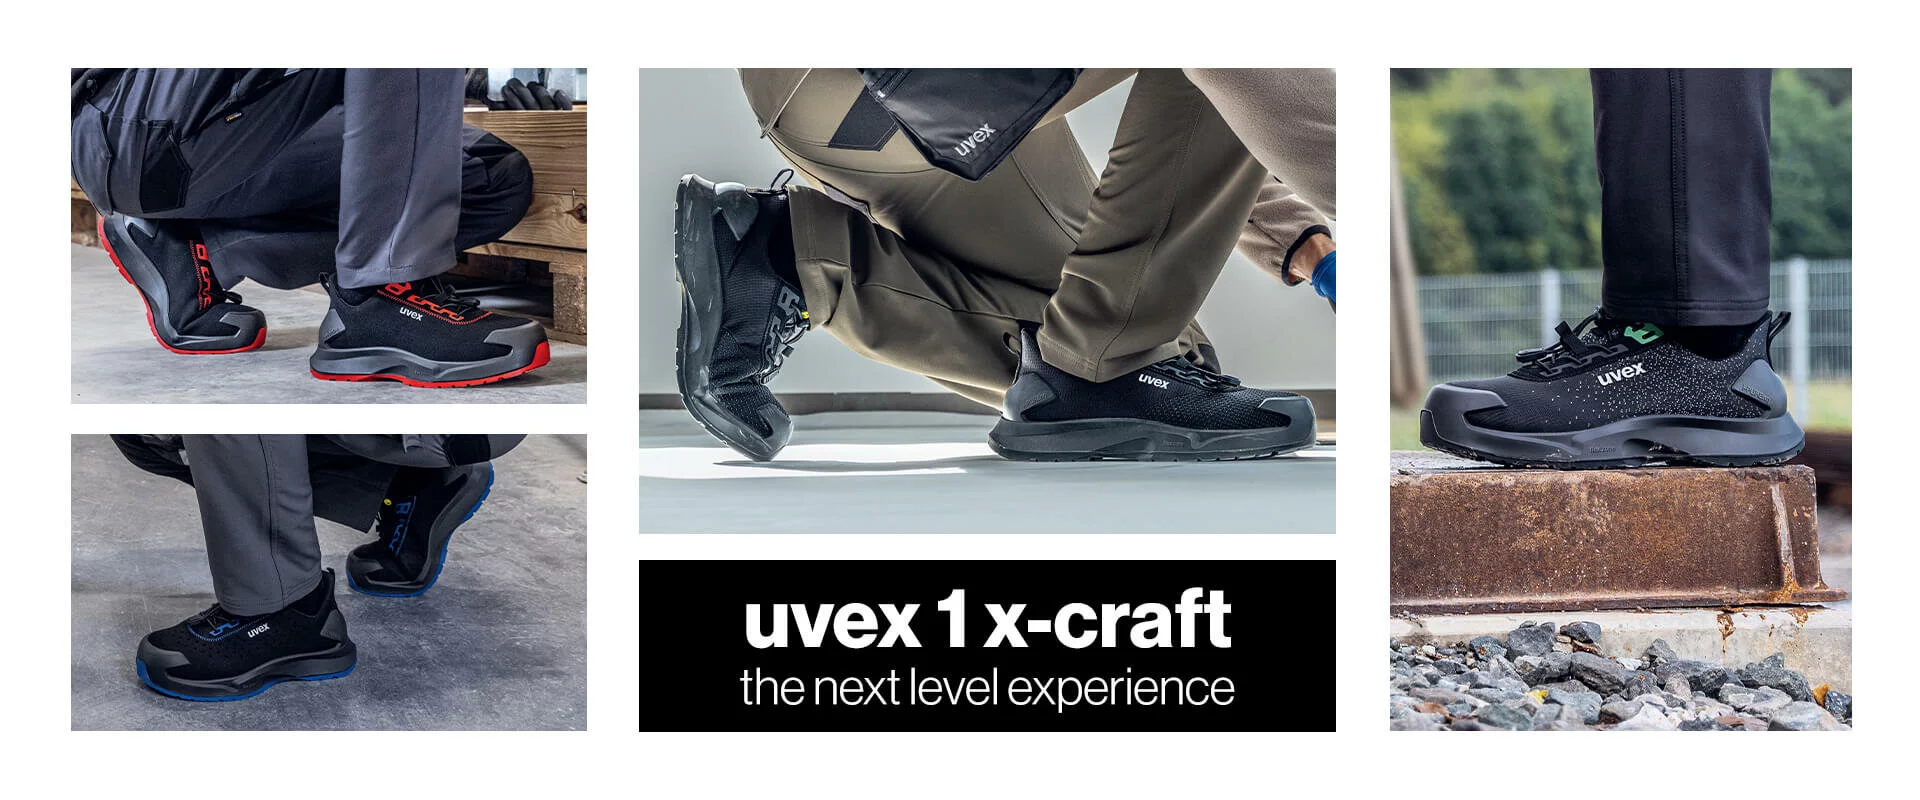 uvex_1_x-craft